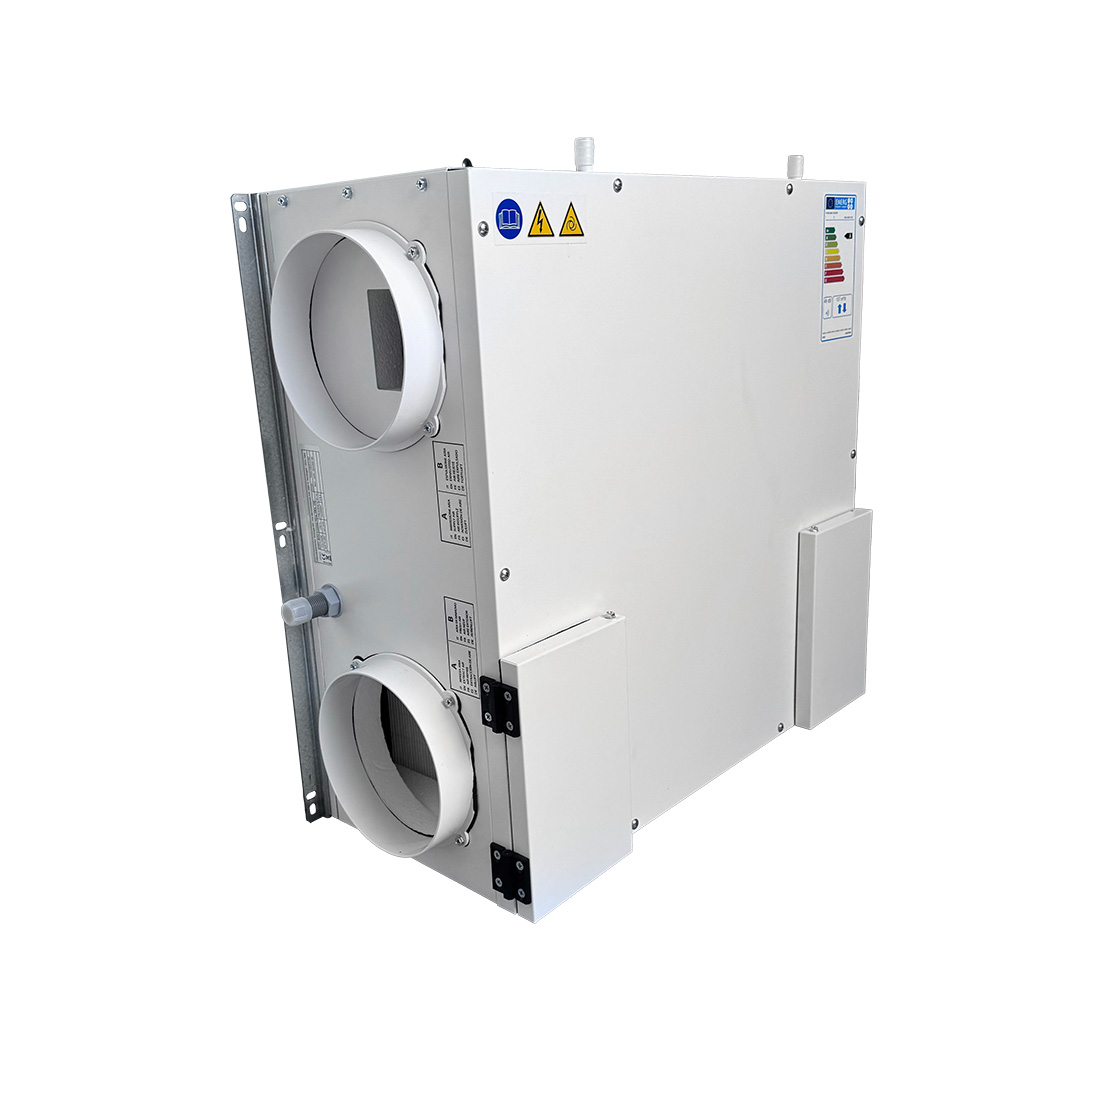 Special Offer Panasonic Counter Flow Ventilation VENTX 15Z